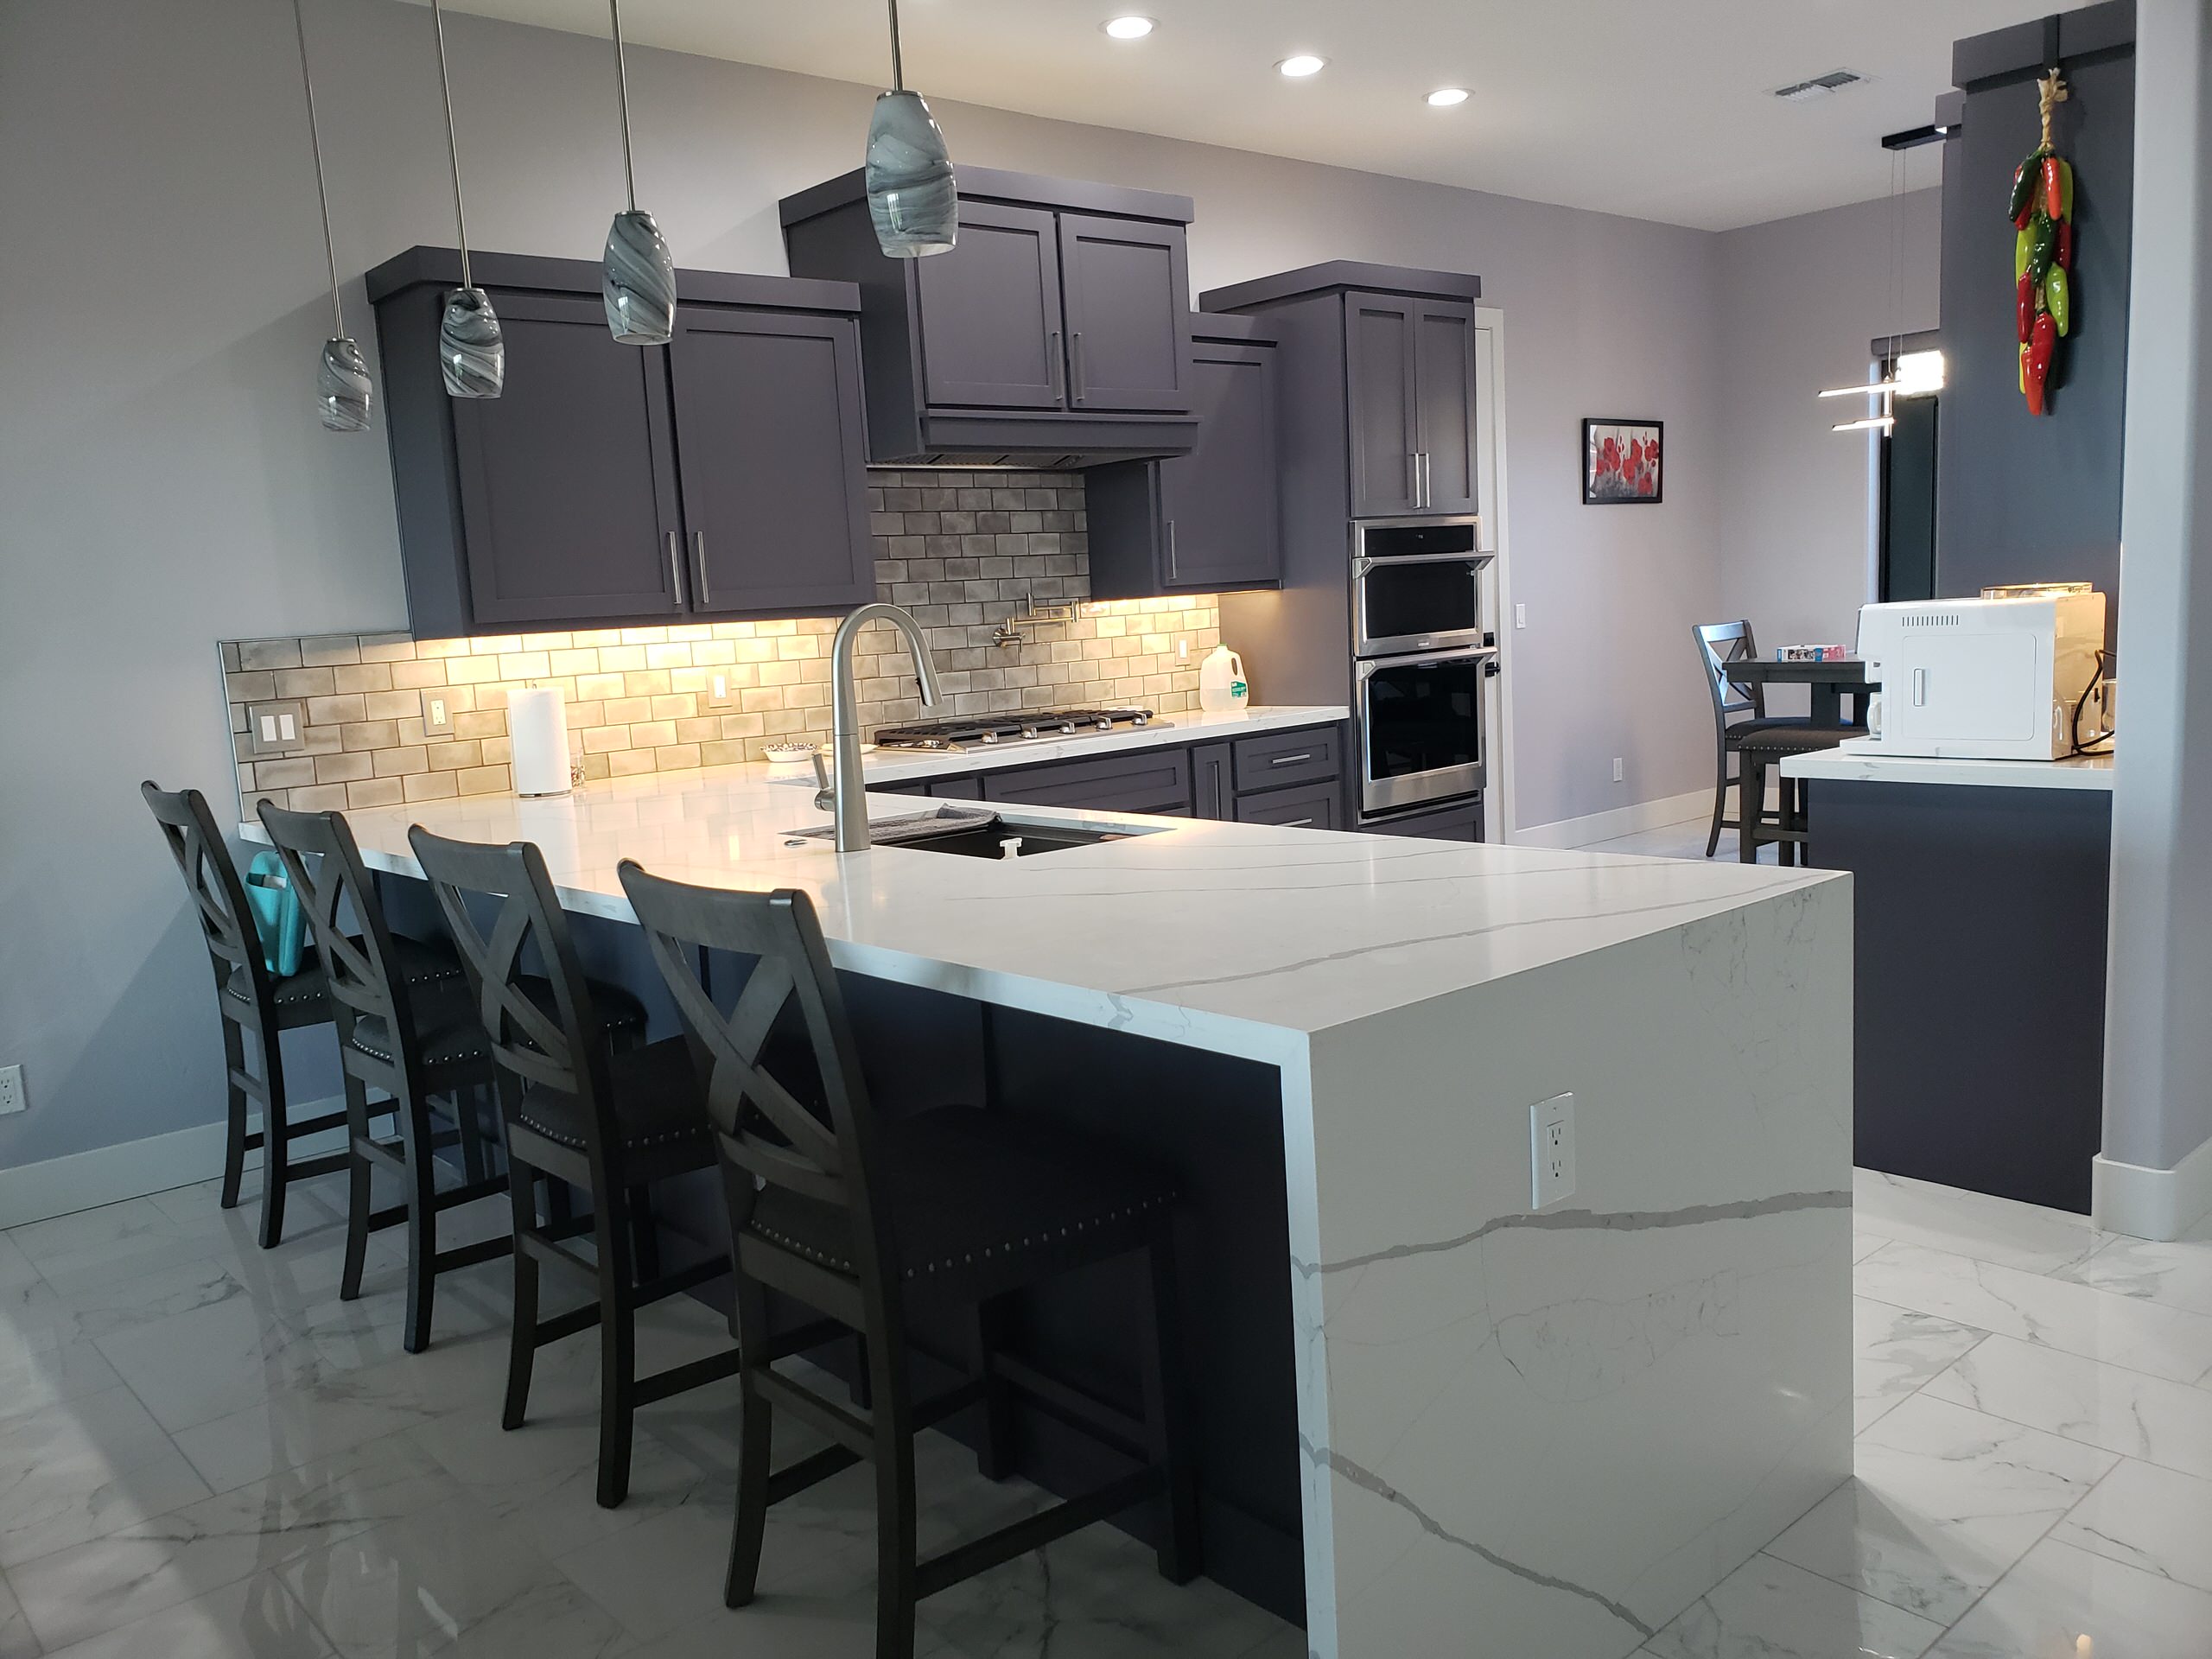 Amazing kitchen designs for custom homes